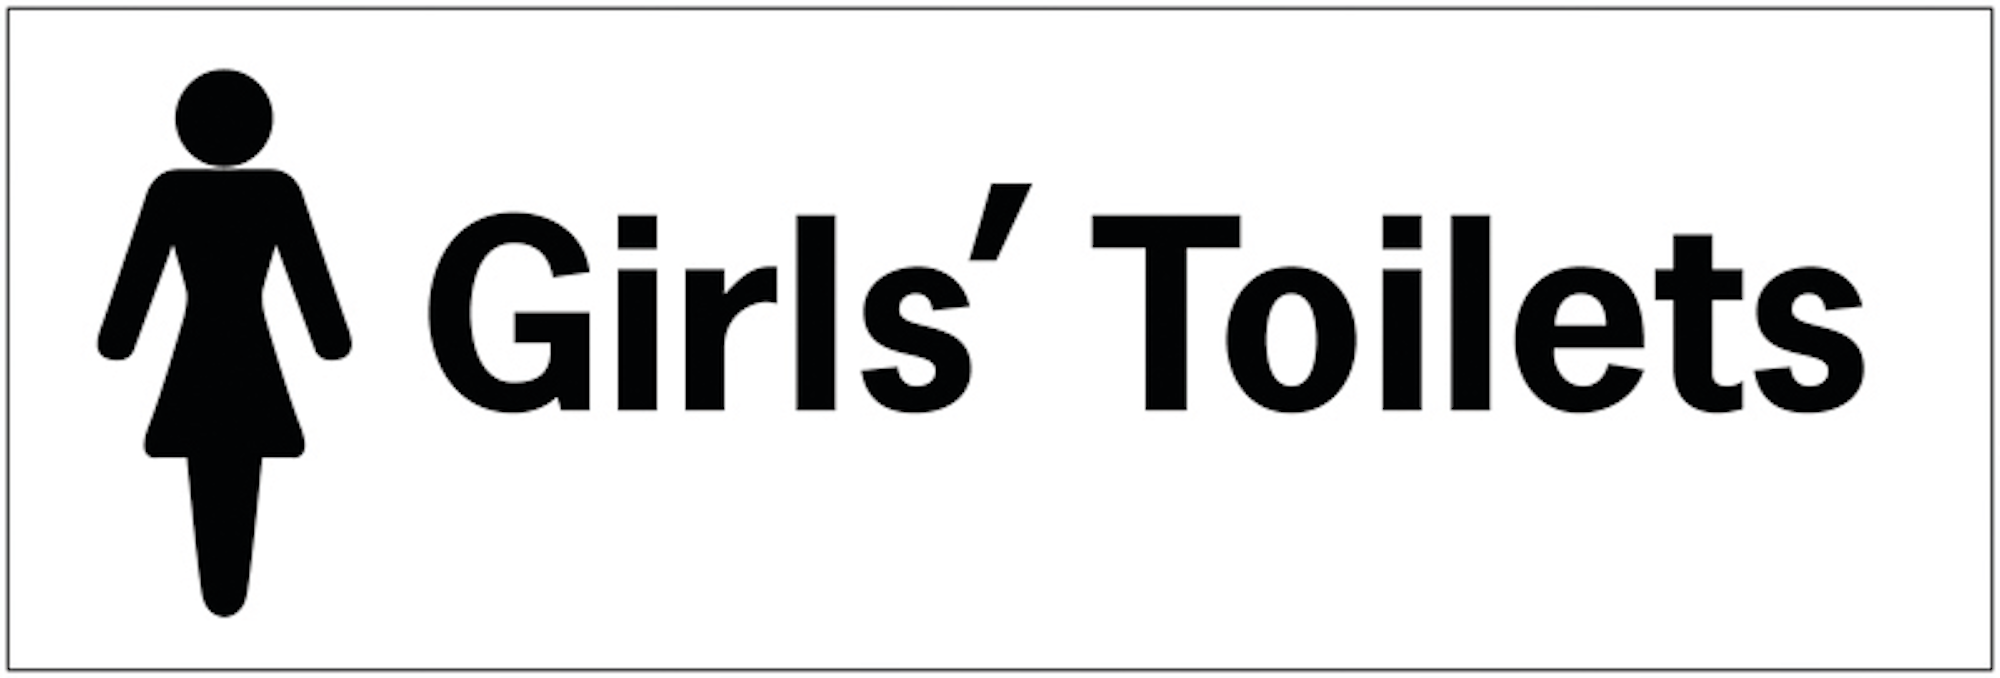 GIRLS TOILETS